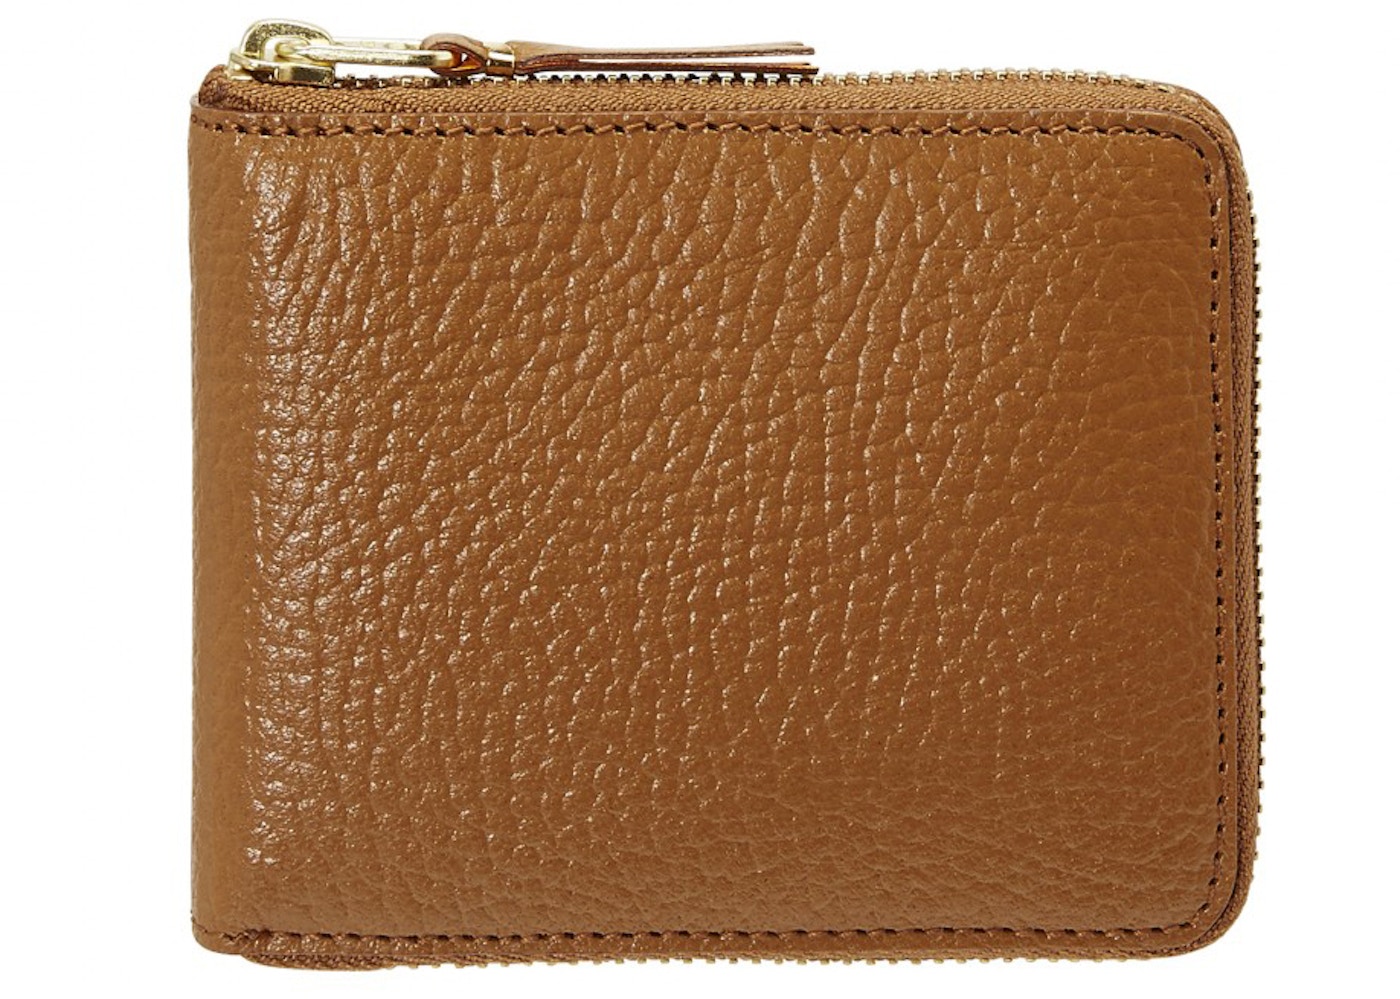 Comme des Garcons SA7100MI Colour Inside Wallet Brown/Orange in Leather ...